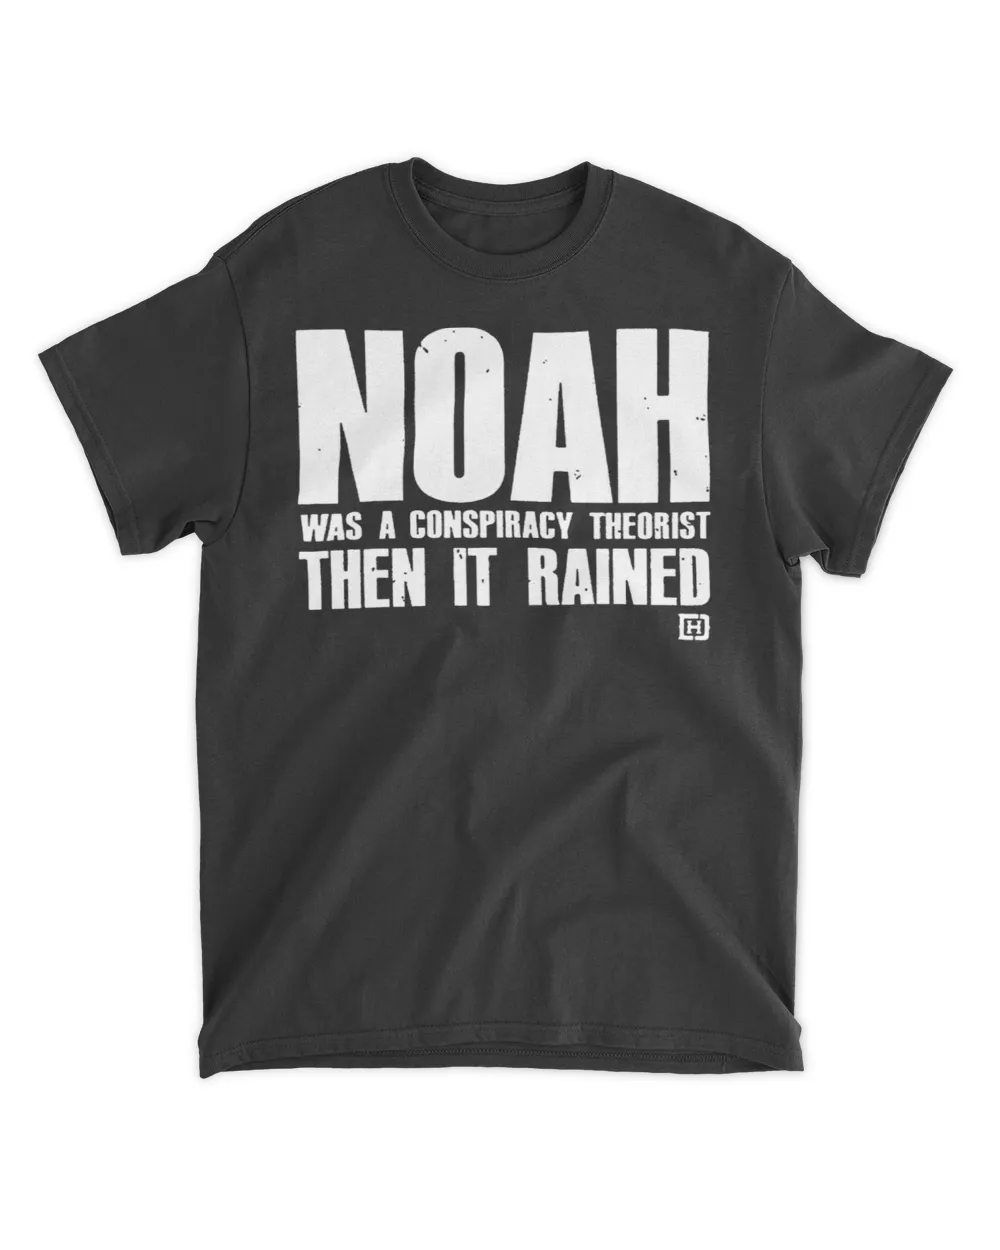  Noah was a conspiracy theorist then it rained shirt